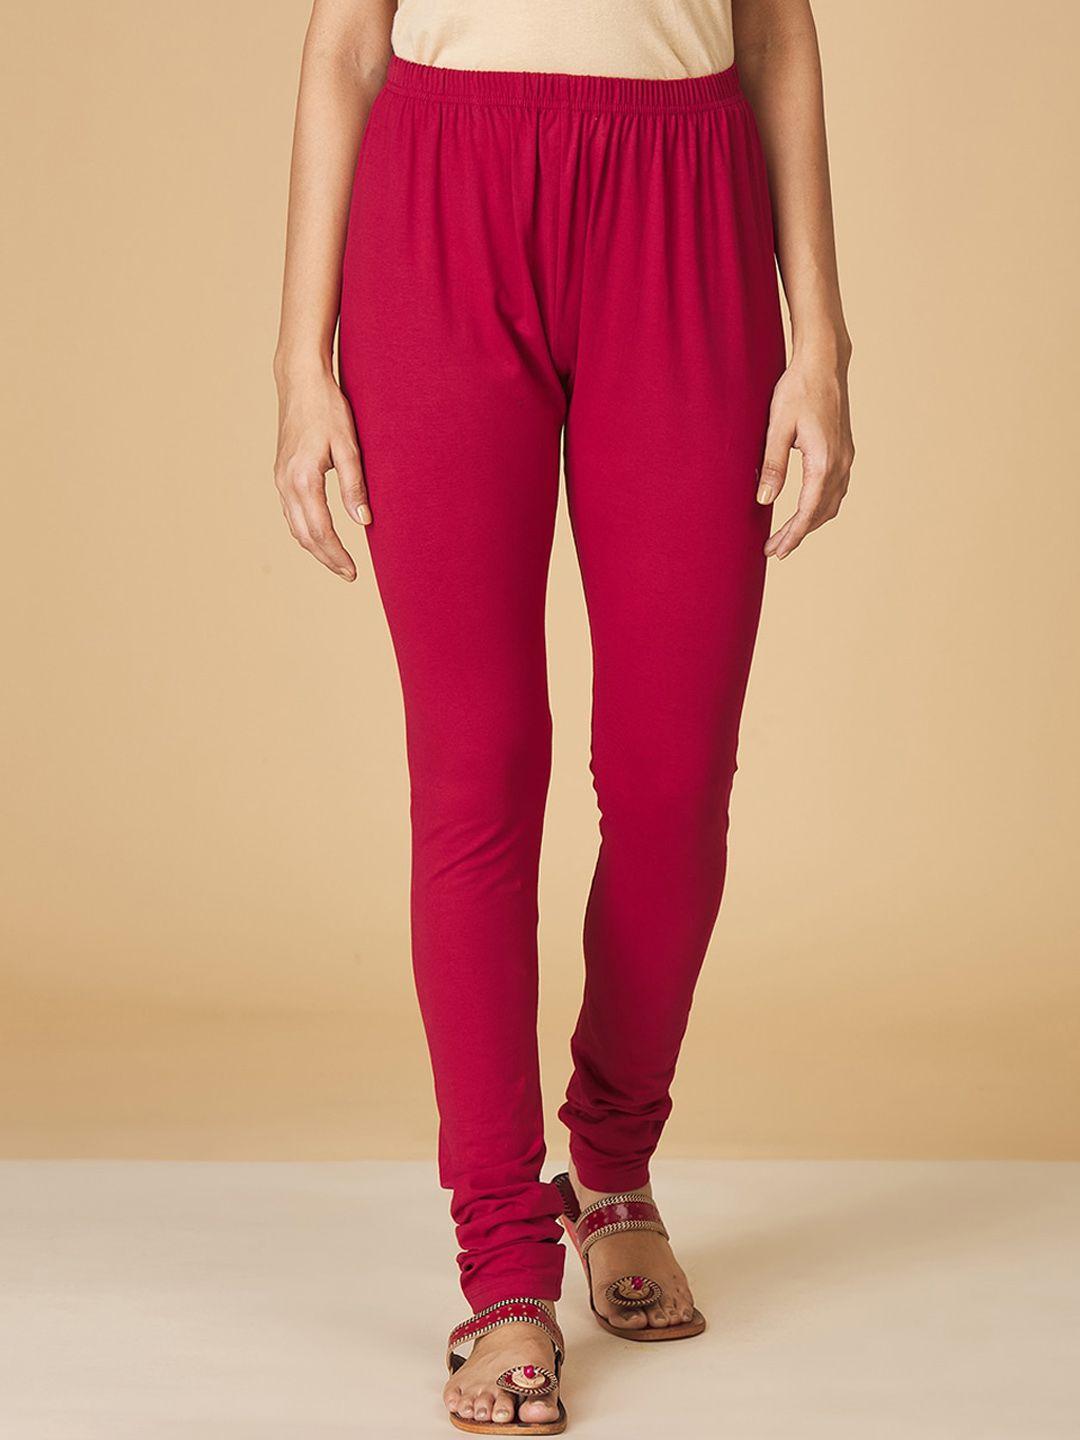 fabindia-red-cotton-churidar-length-leggings